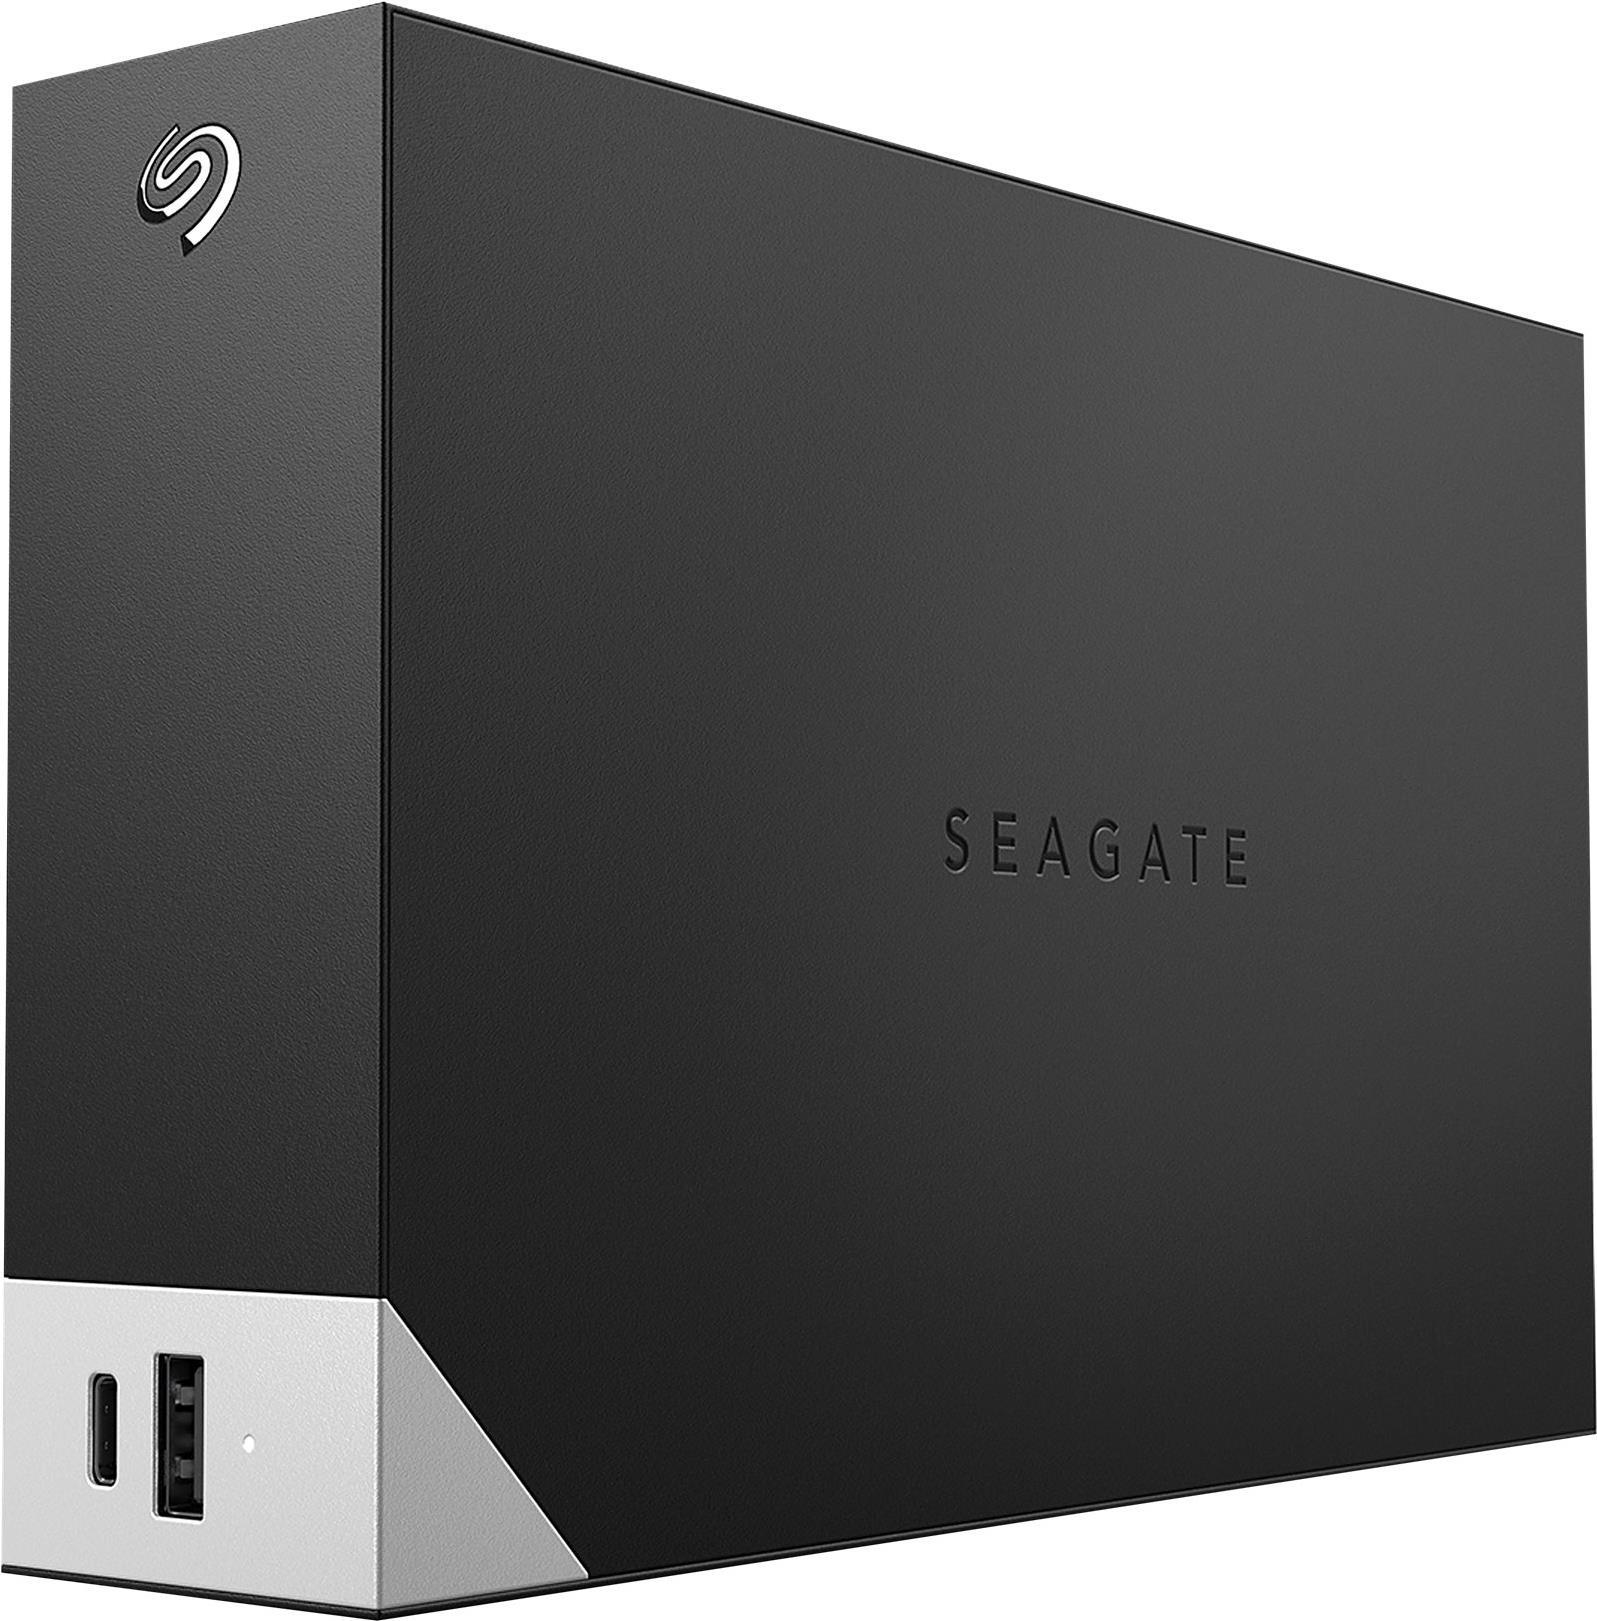 Seagate One Touch with hub STLC20000400 (STLC20000400)